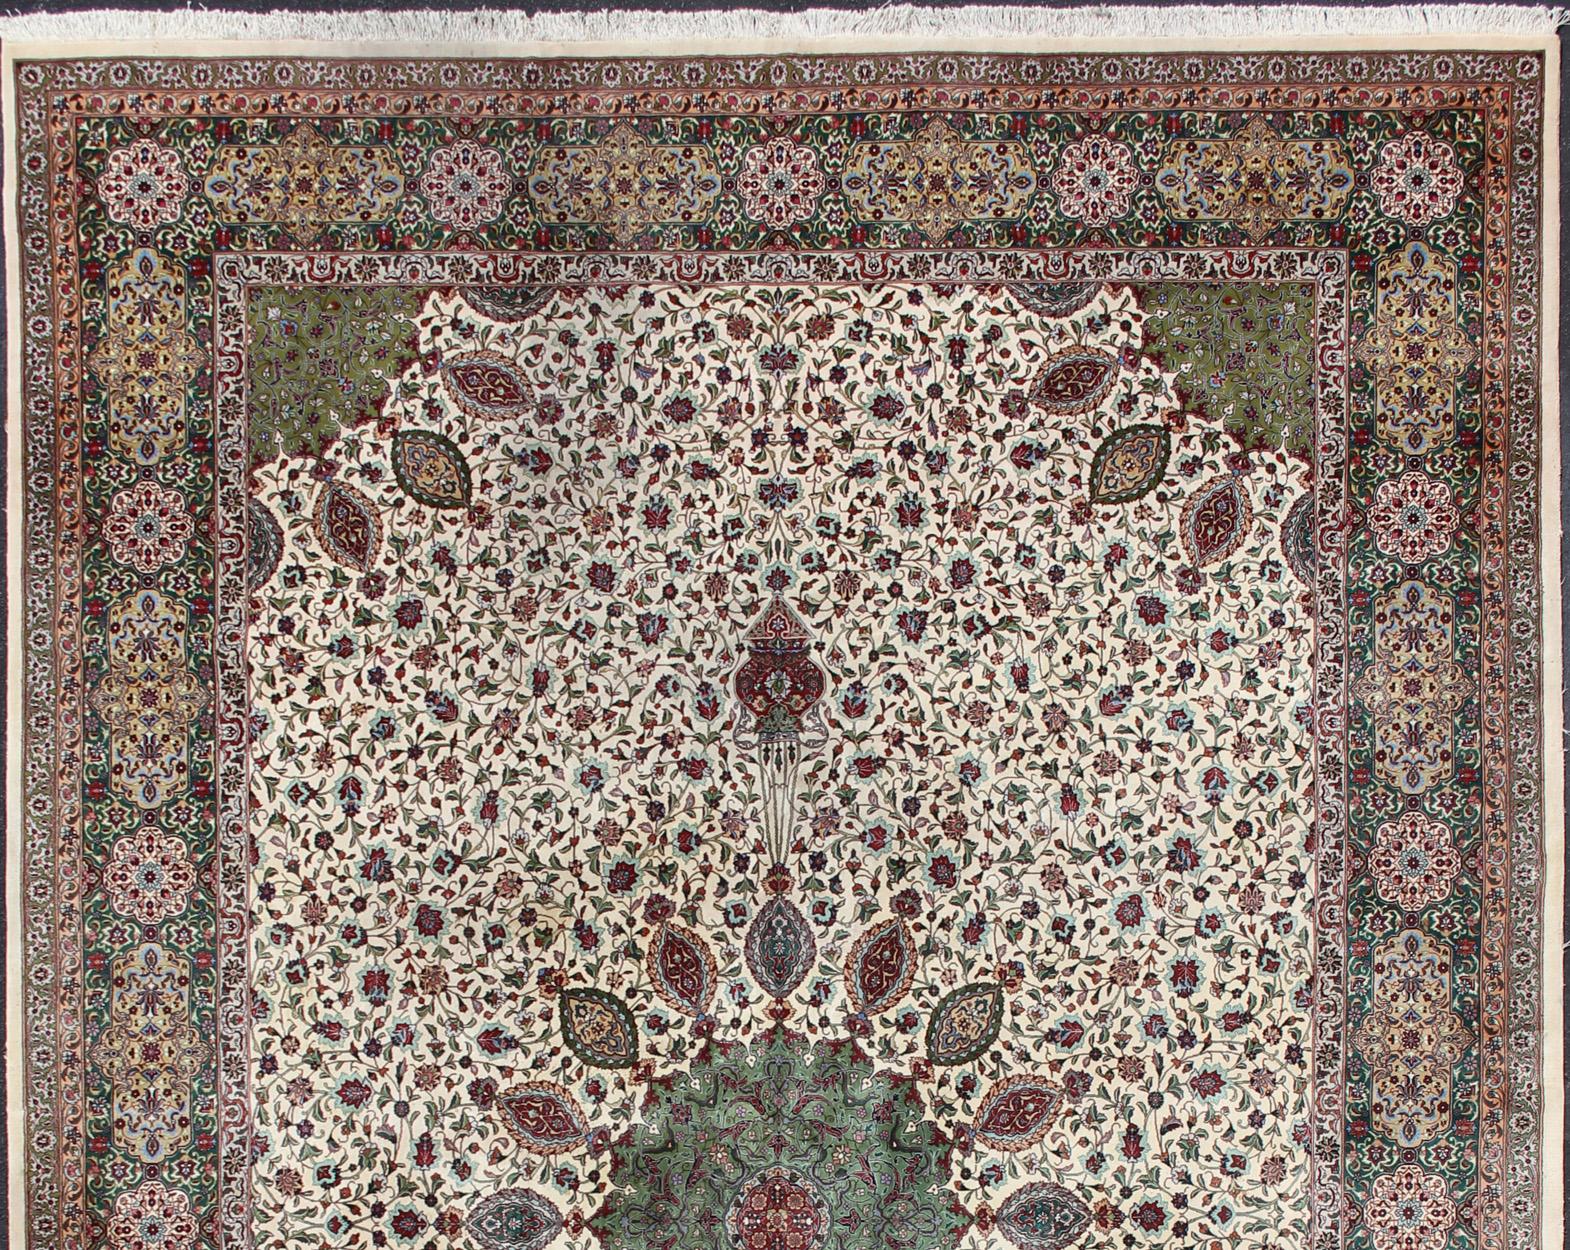 Ornate and refined vintage Persian Fine Tabriz rug with medallion design
Colorful Tabriz vintage rug from Persia with elegant medallion floral design, rug 19-0215, country of origin / type: Iran / Tabriz, circa 1960

This vintage Persian Tabriz